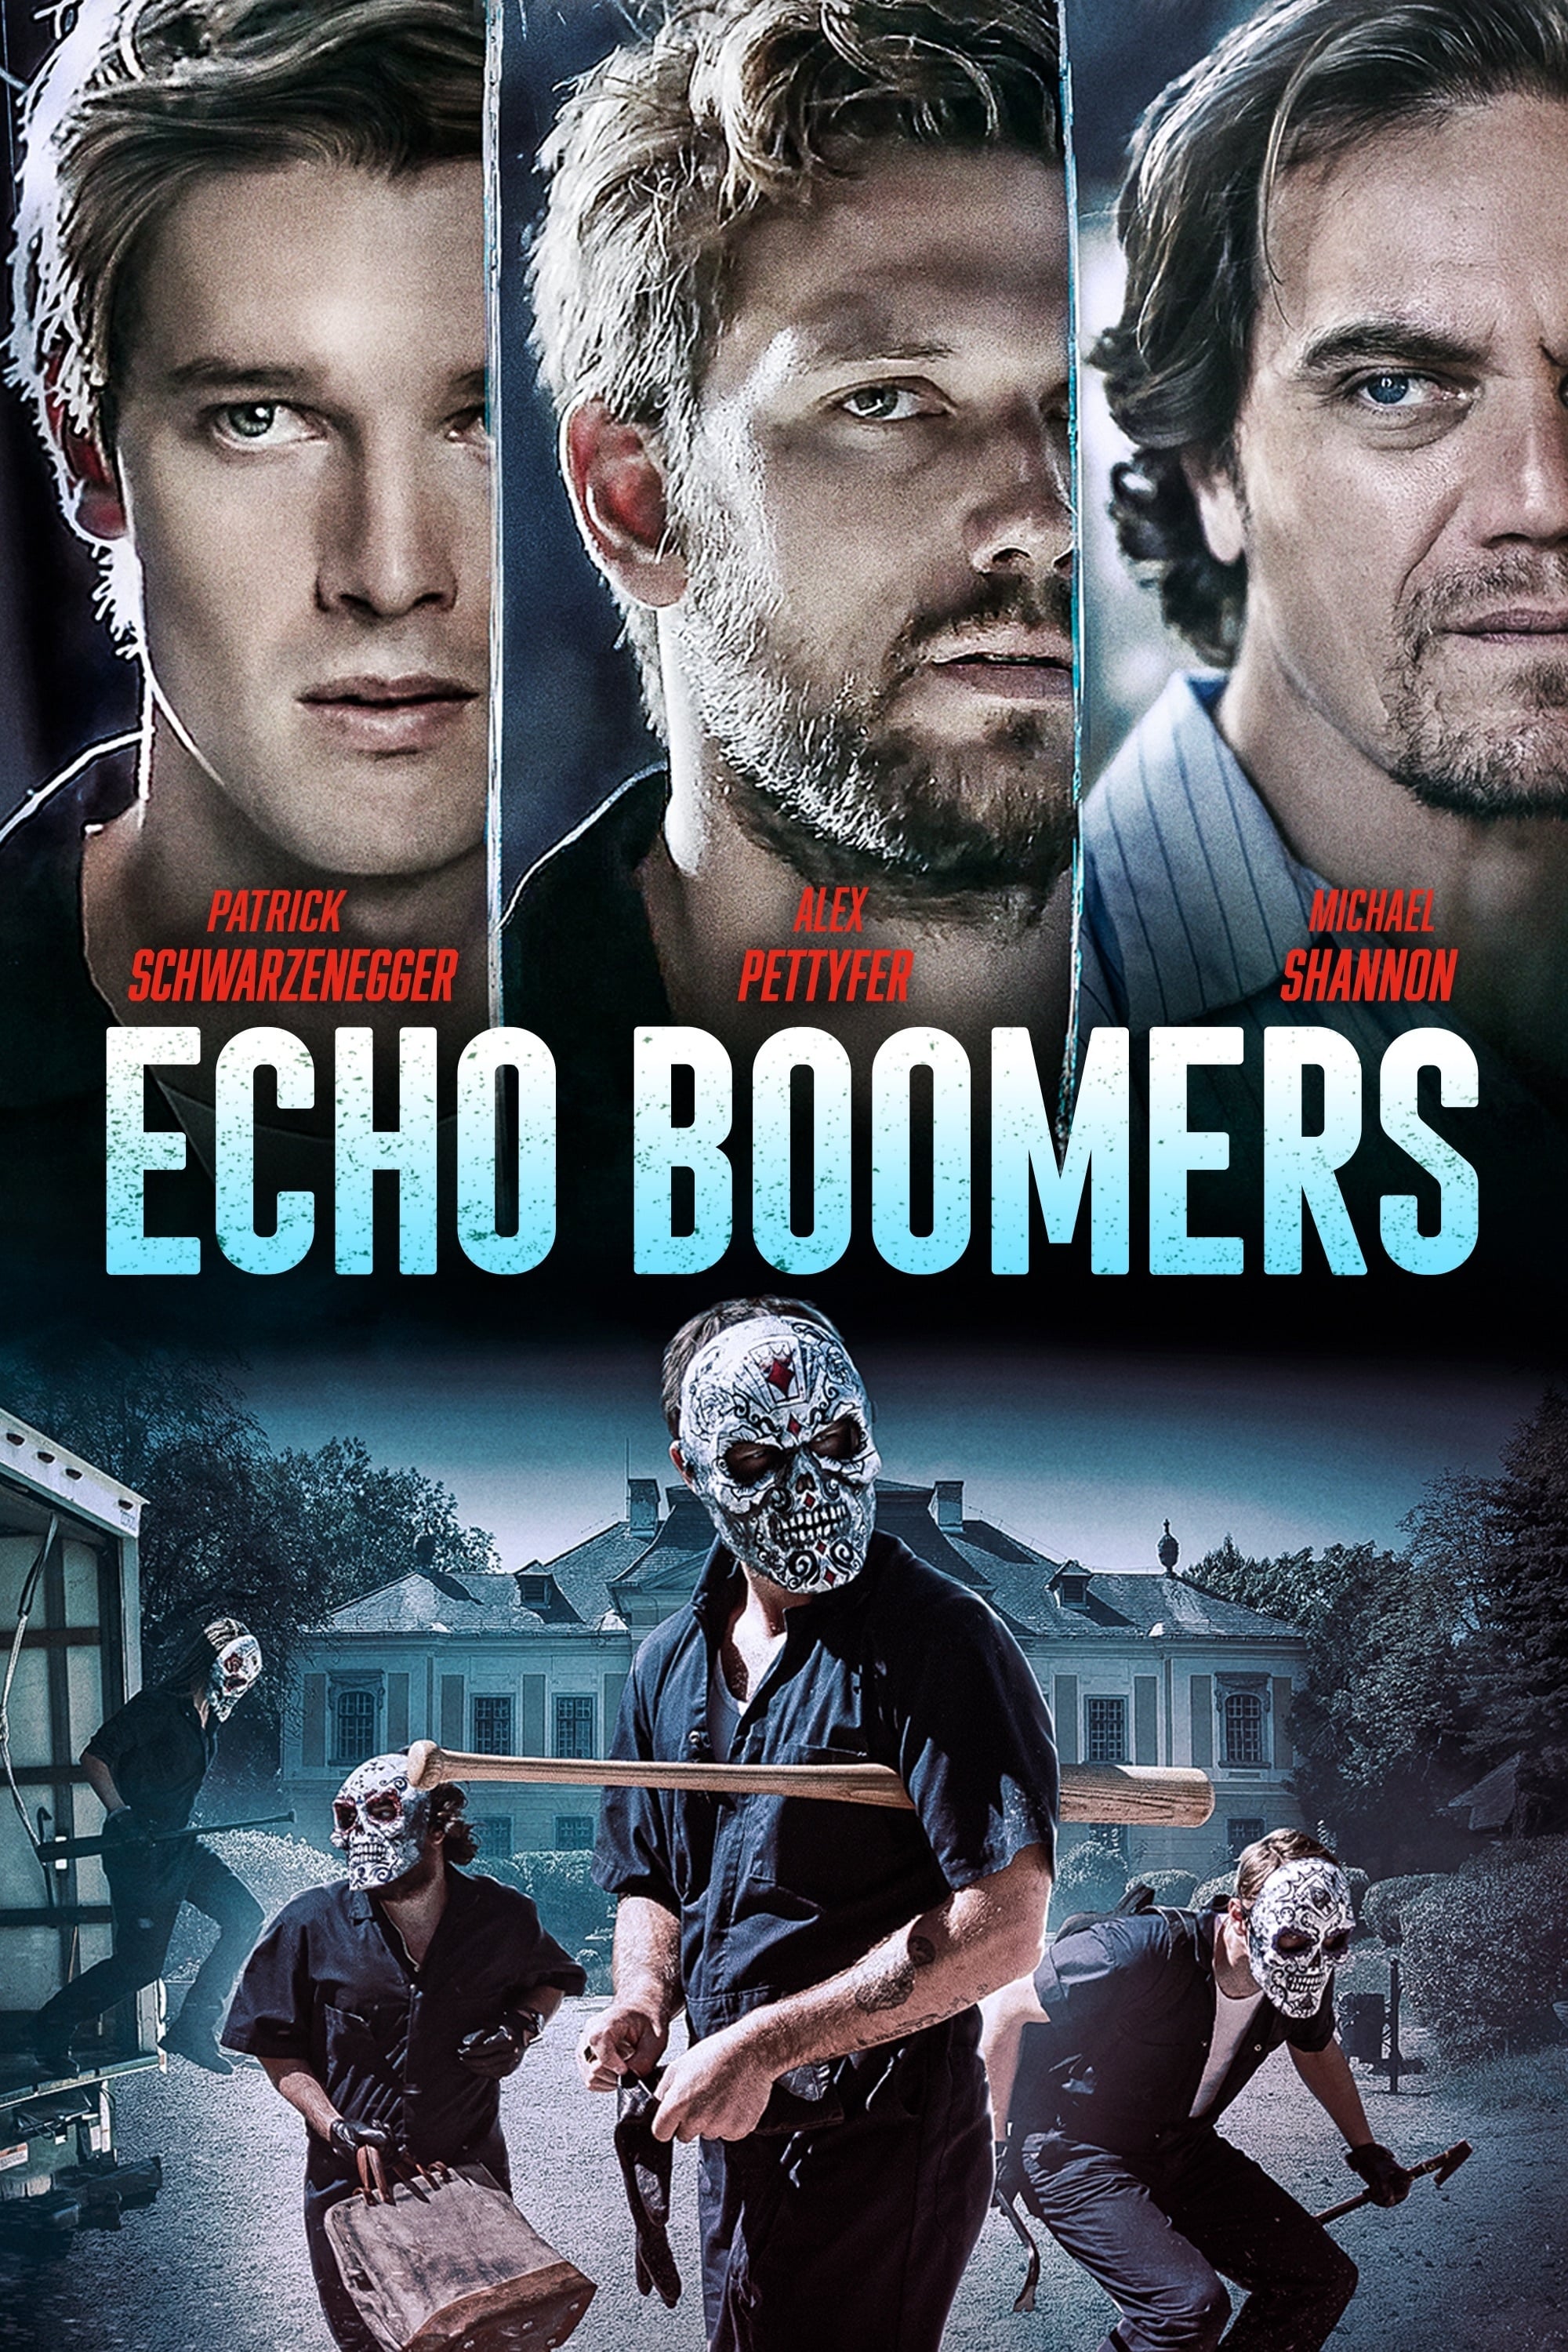 2020 Echo Boomers